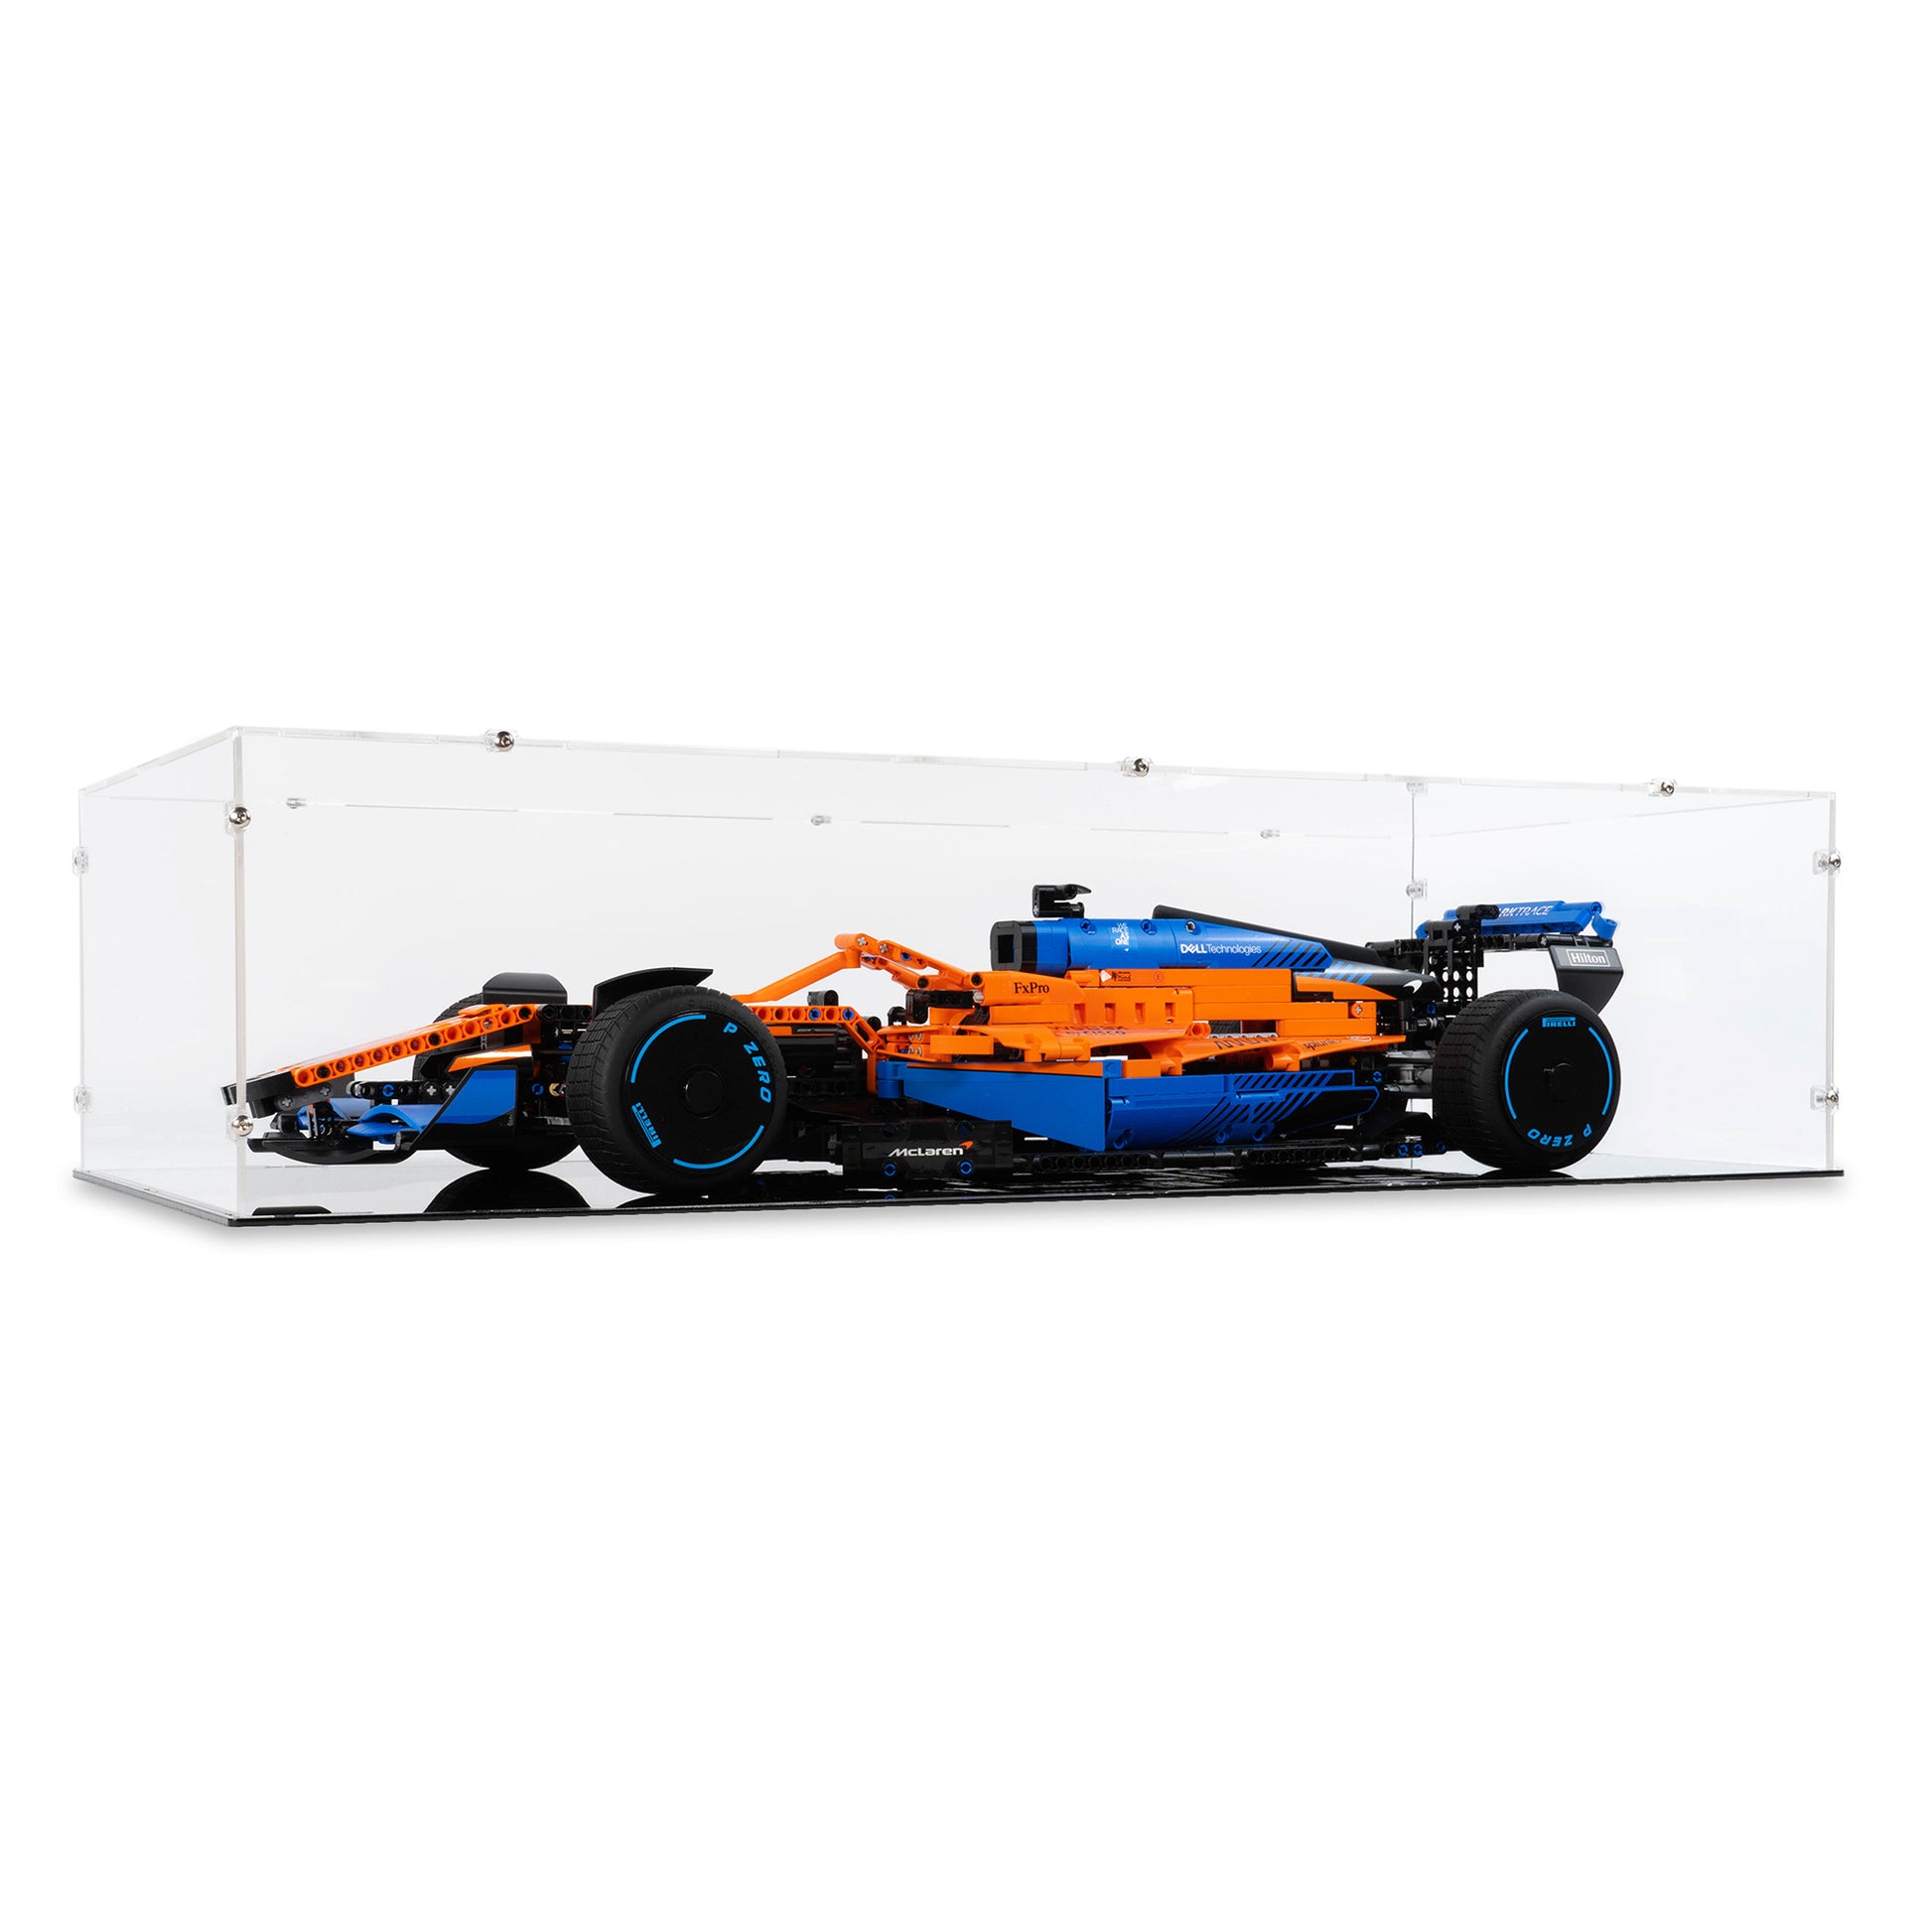 LEGO Technic 42141 McLaren Formula 1 Race Car full review